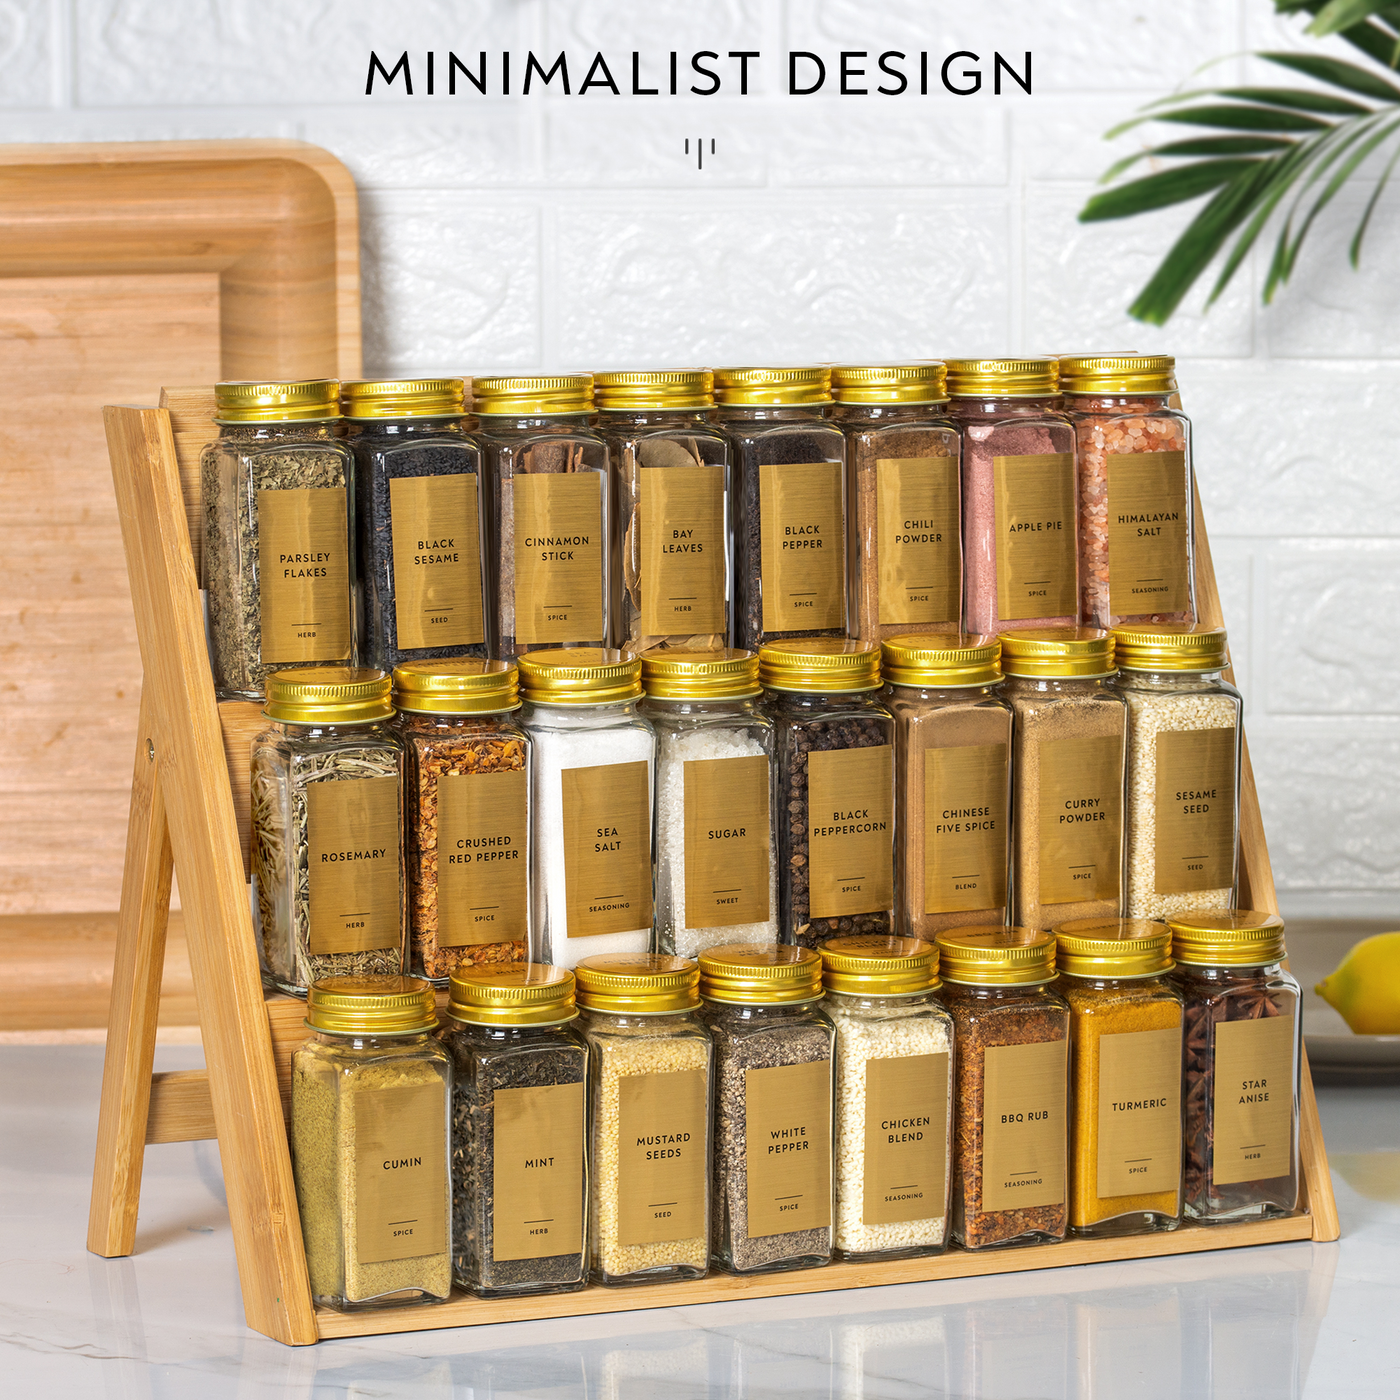 GMISUN 4 oz Glass Jars with Lids, Glass Spice Jars with Labels